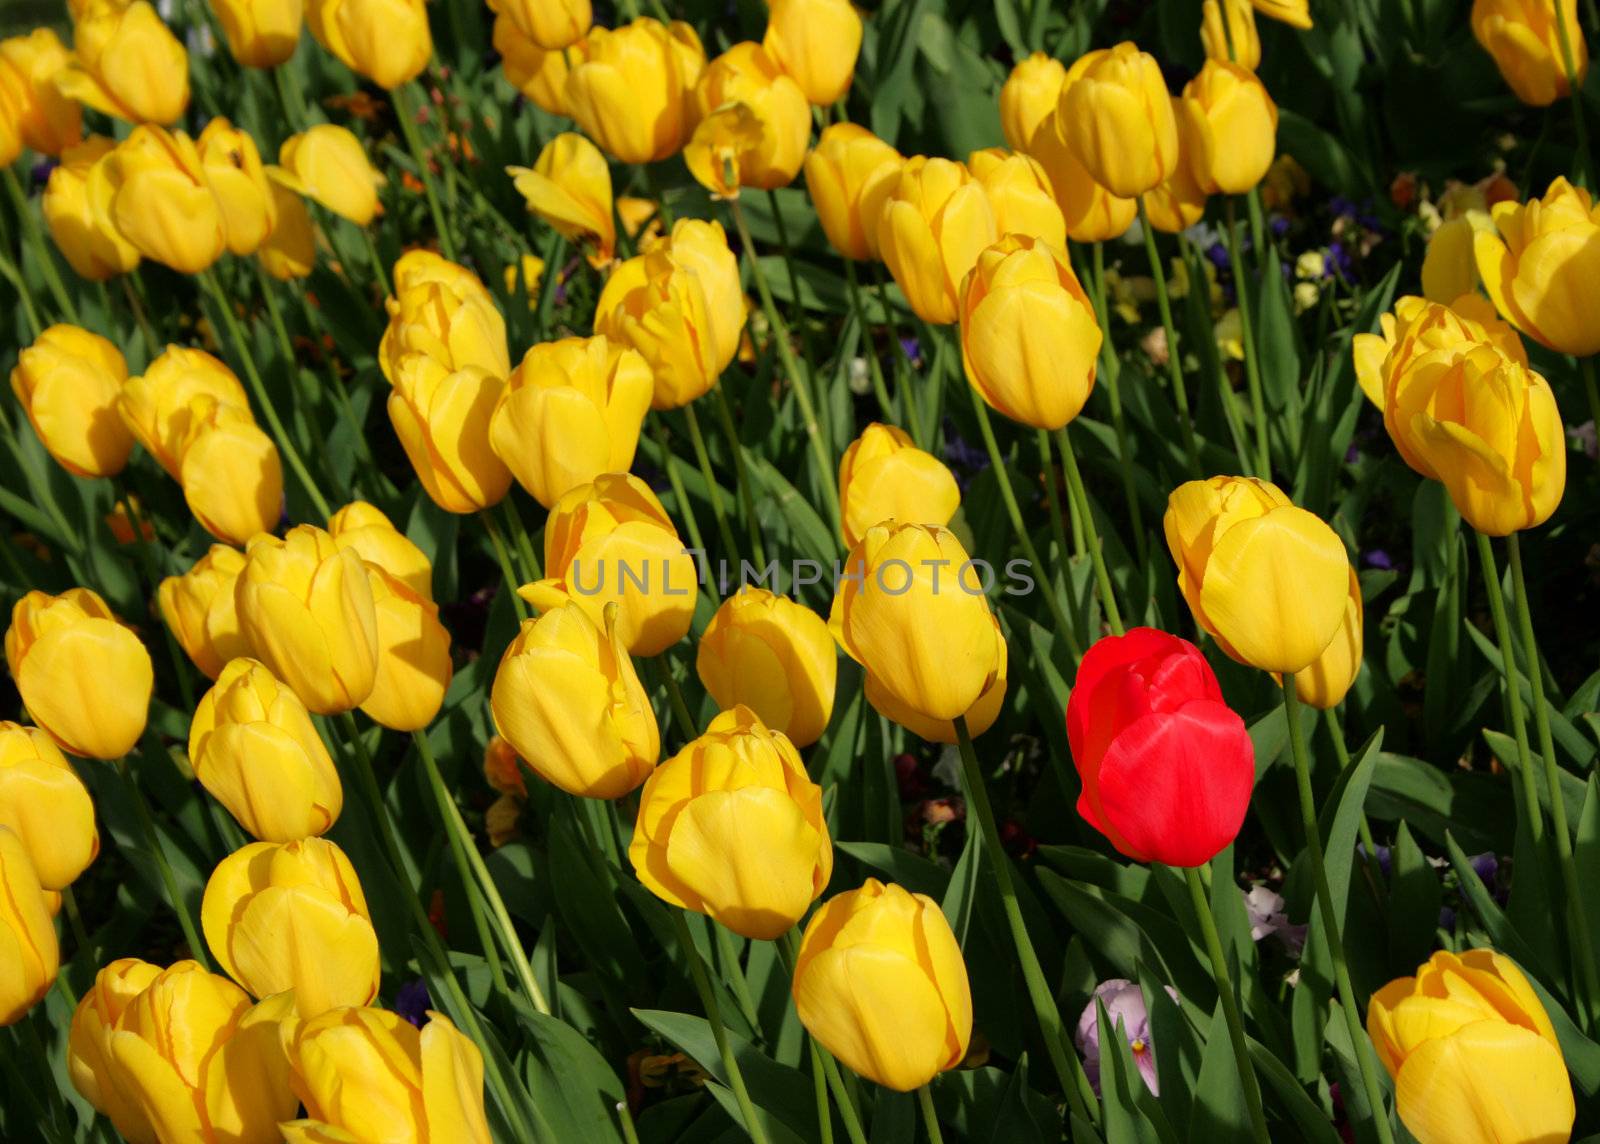 Red tulip among yellow tuplis by cristiaciobanu